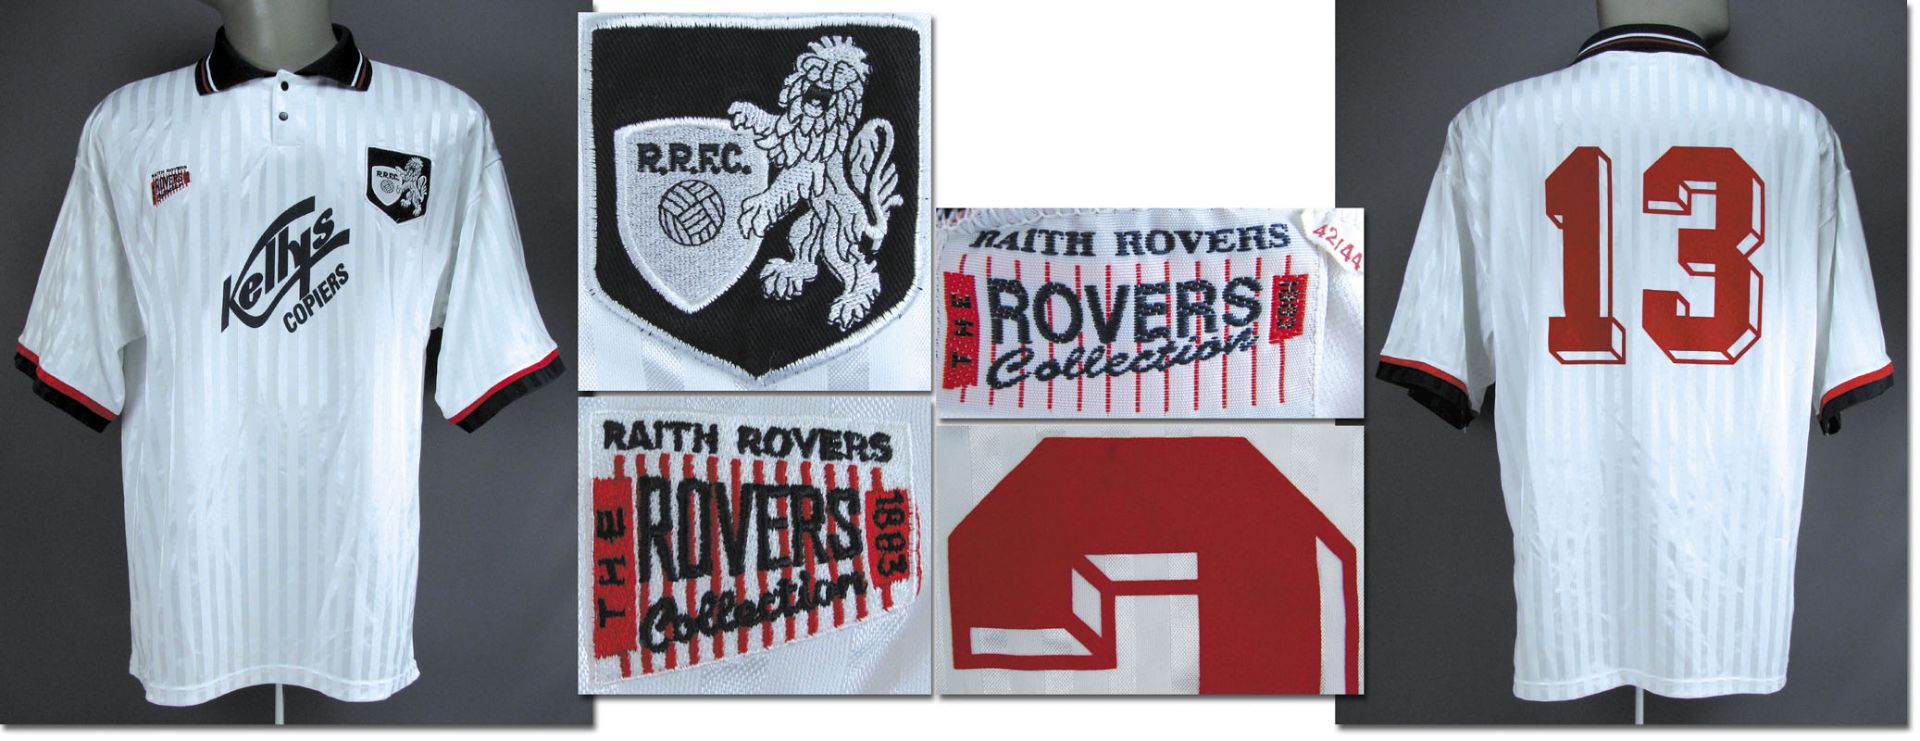 match worn football shirt Raith Rovers 1995/96 - Original match worn shirt Raith Rovers FC with numb - Image 2 of 3